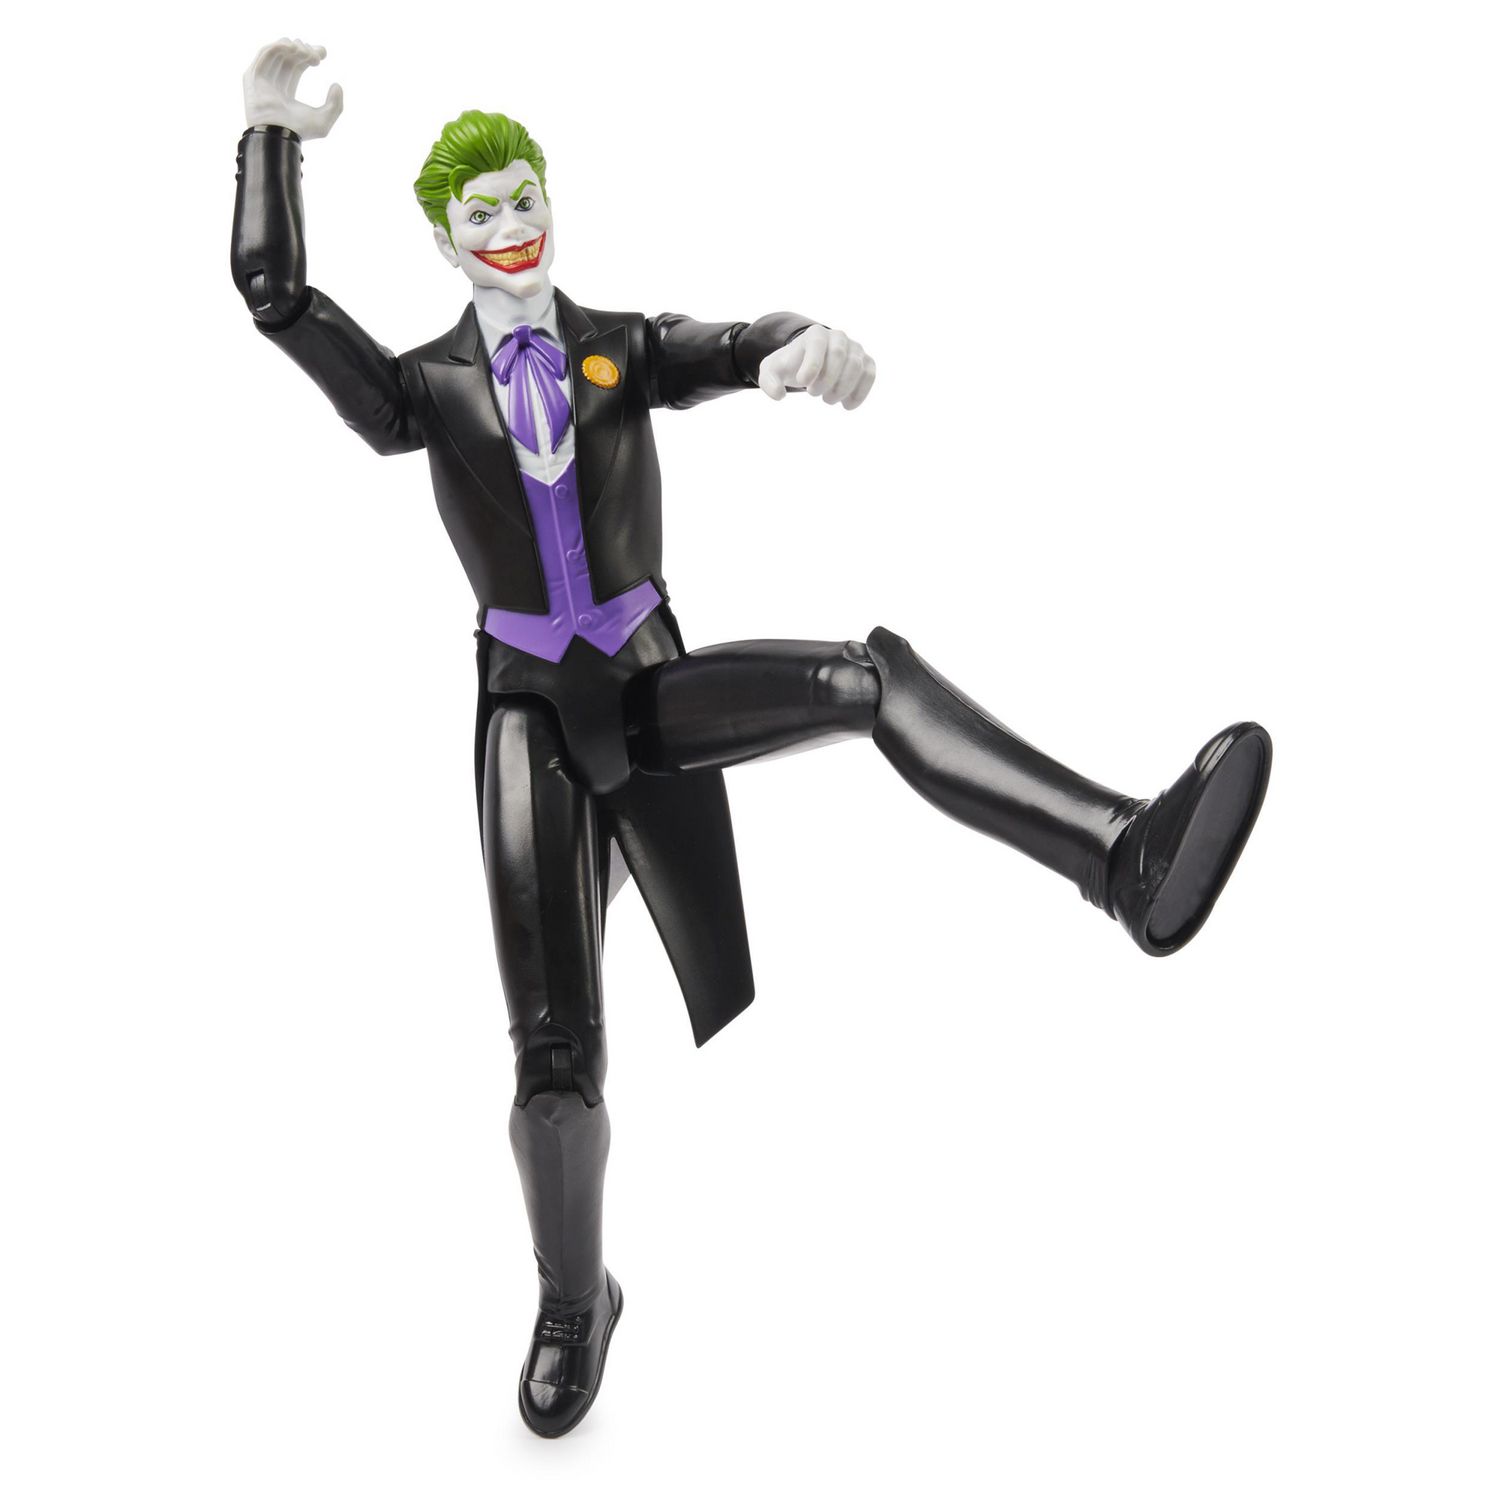 Action Figures DC Comics The Joker Bendable New ab-5013 